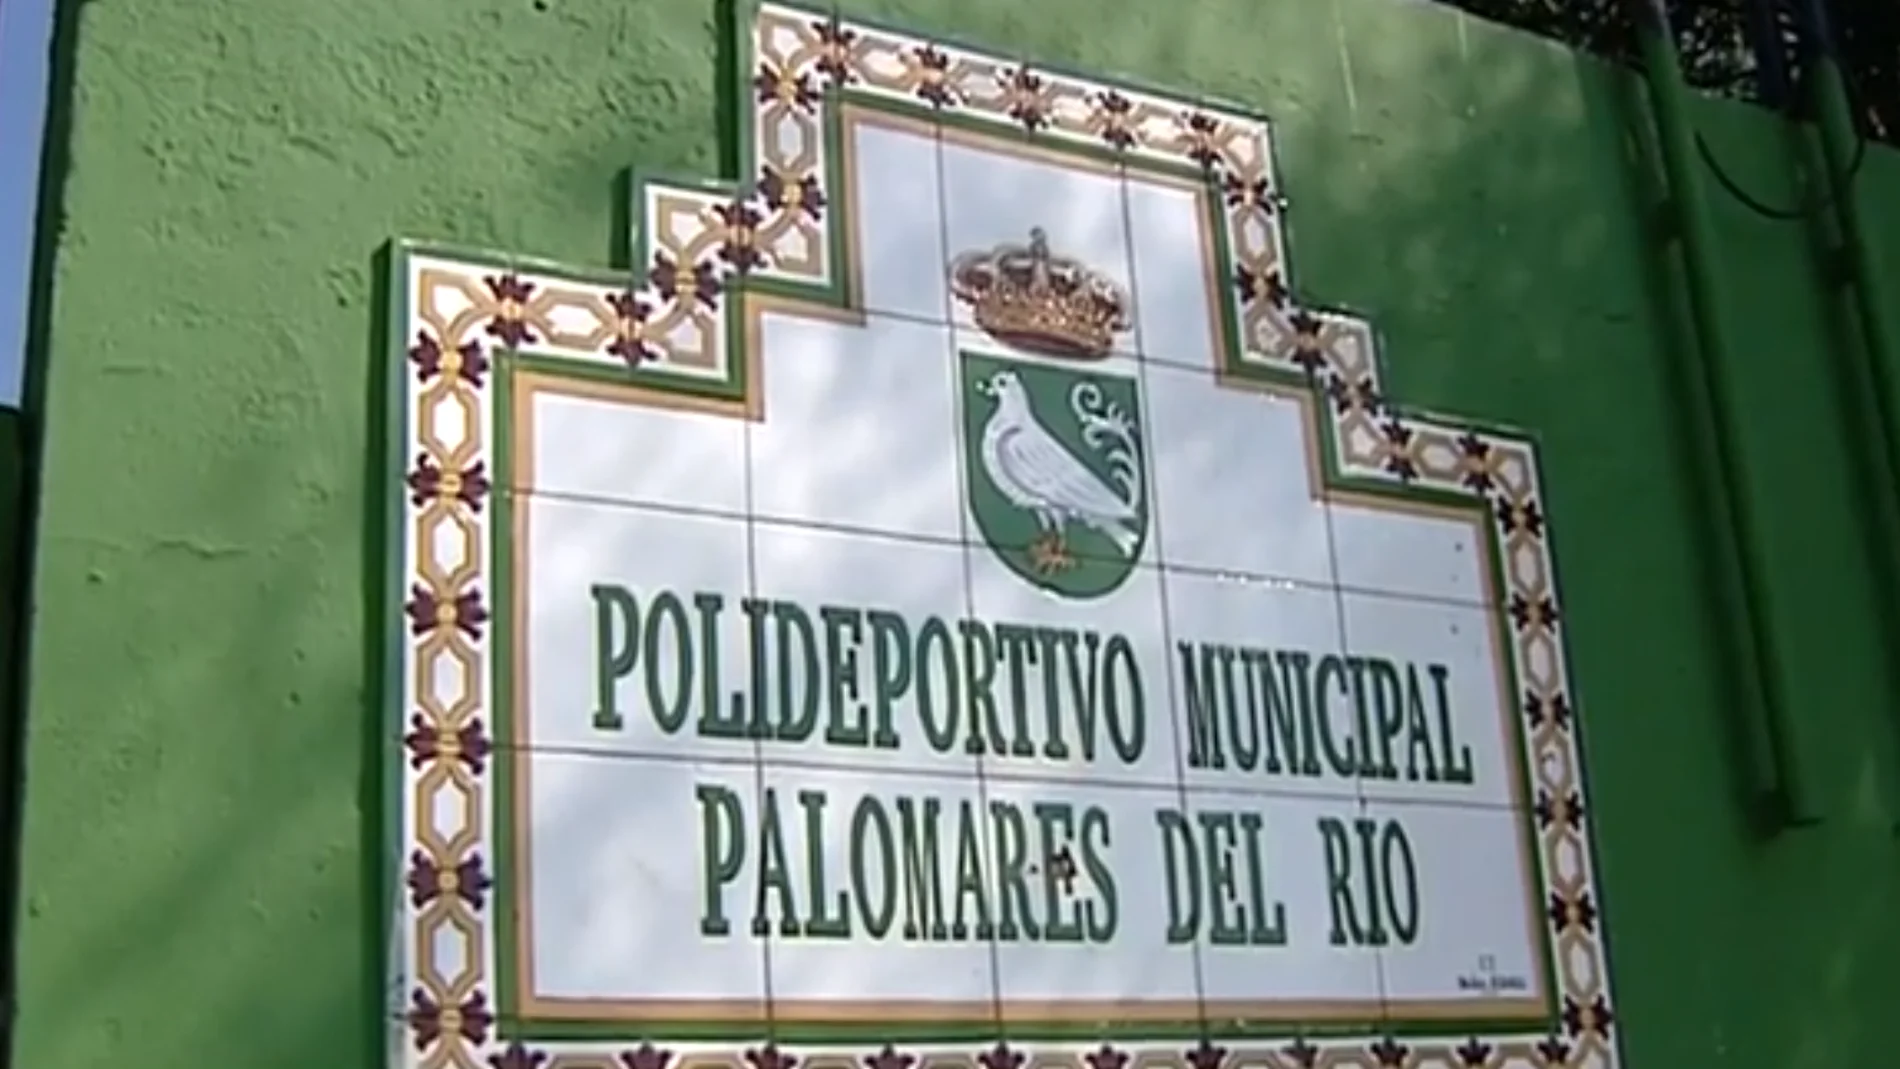 Polideportivo municipal Palomares del Río